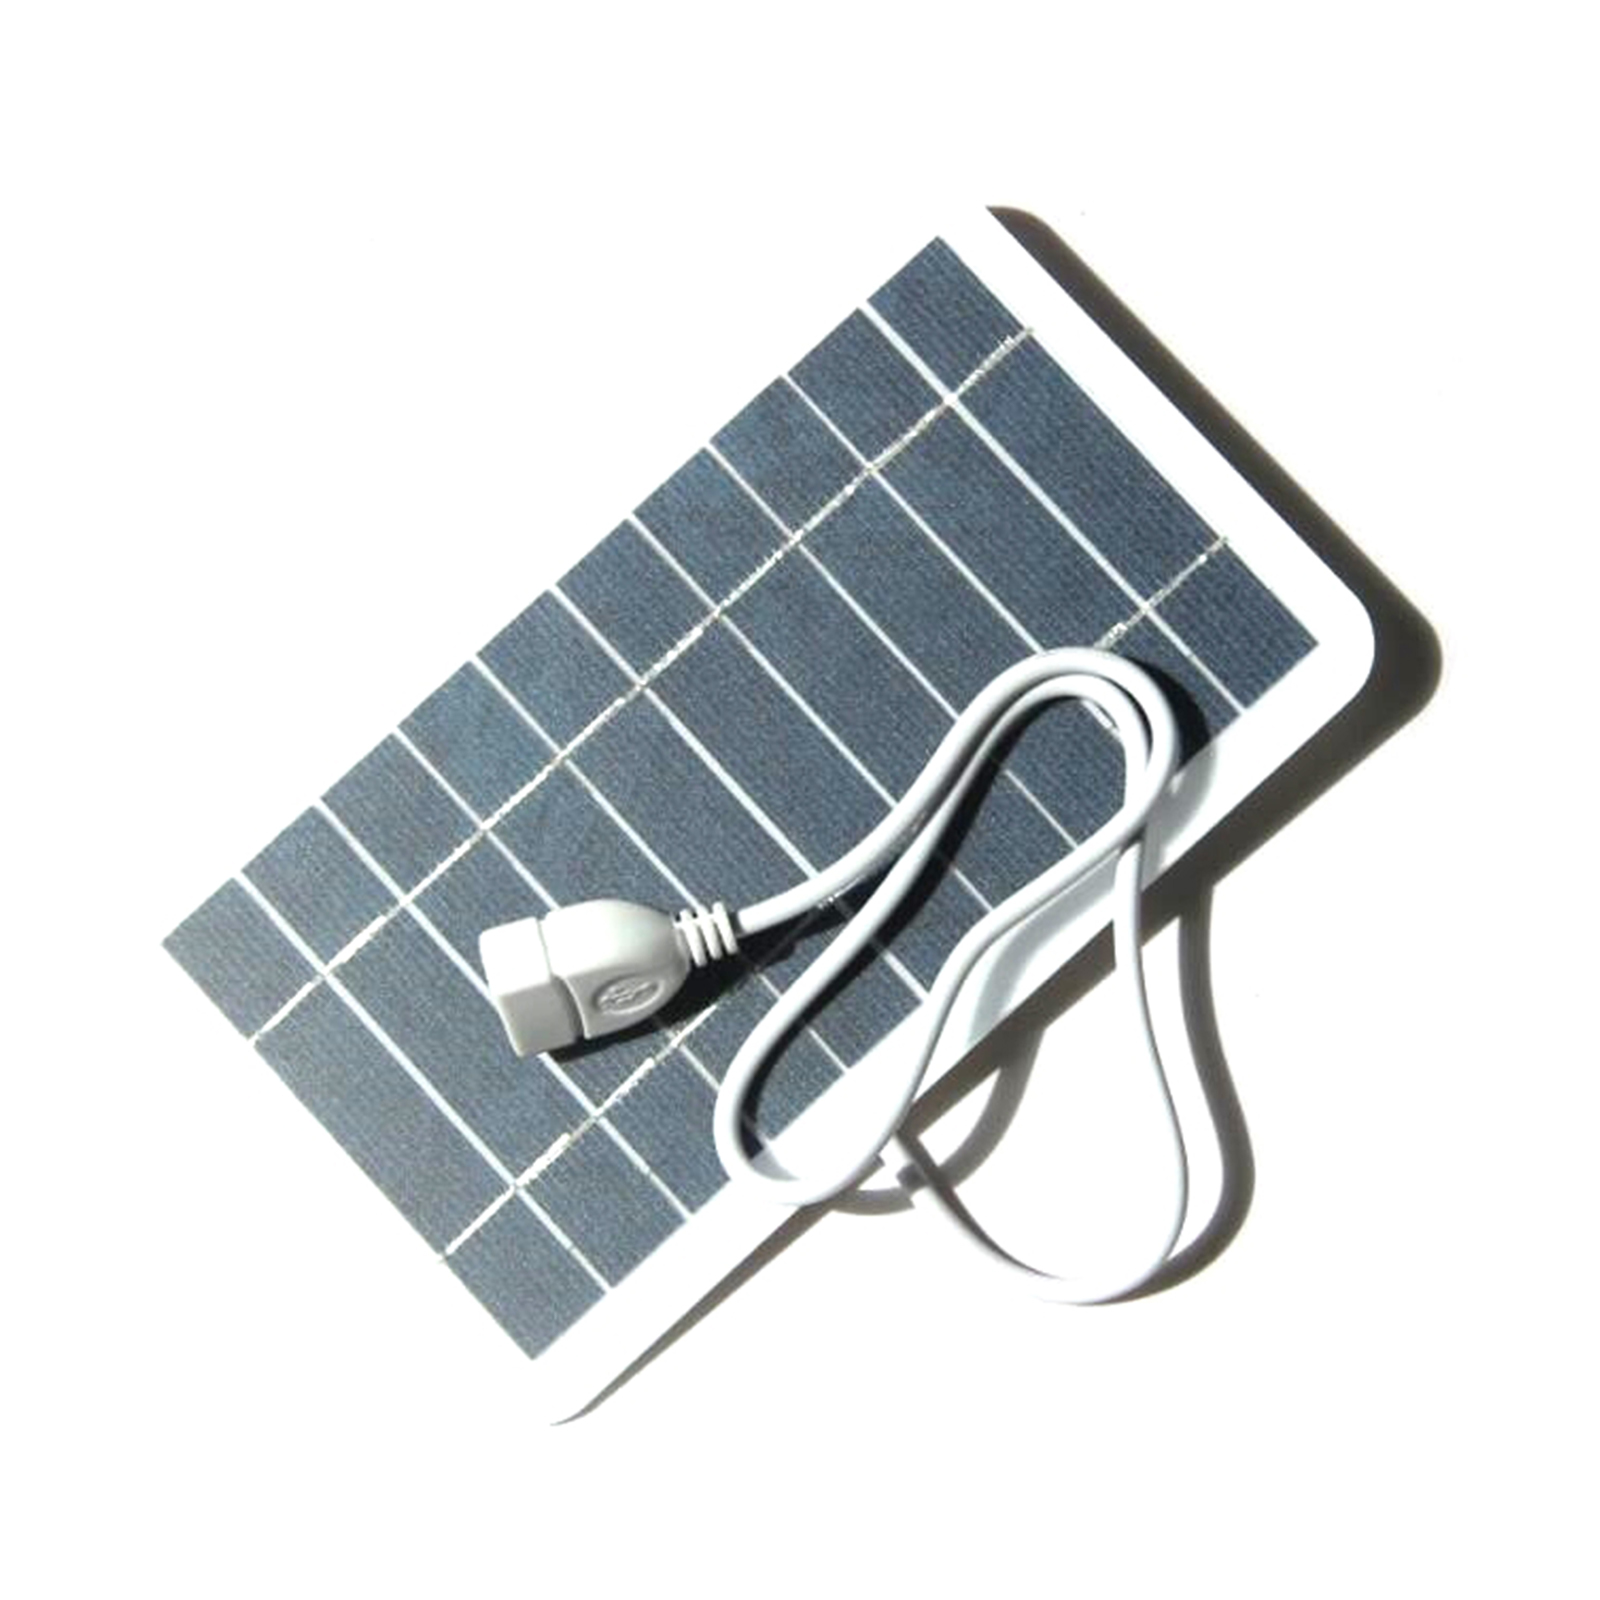 Mini 5v 0,125 w Solar Panel System für DIY Batterie S2Q3 Handy Ladegerät X0V0 